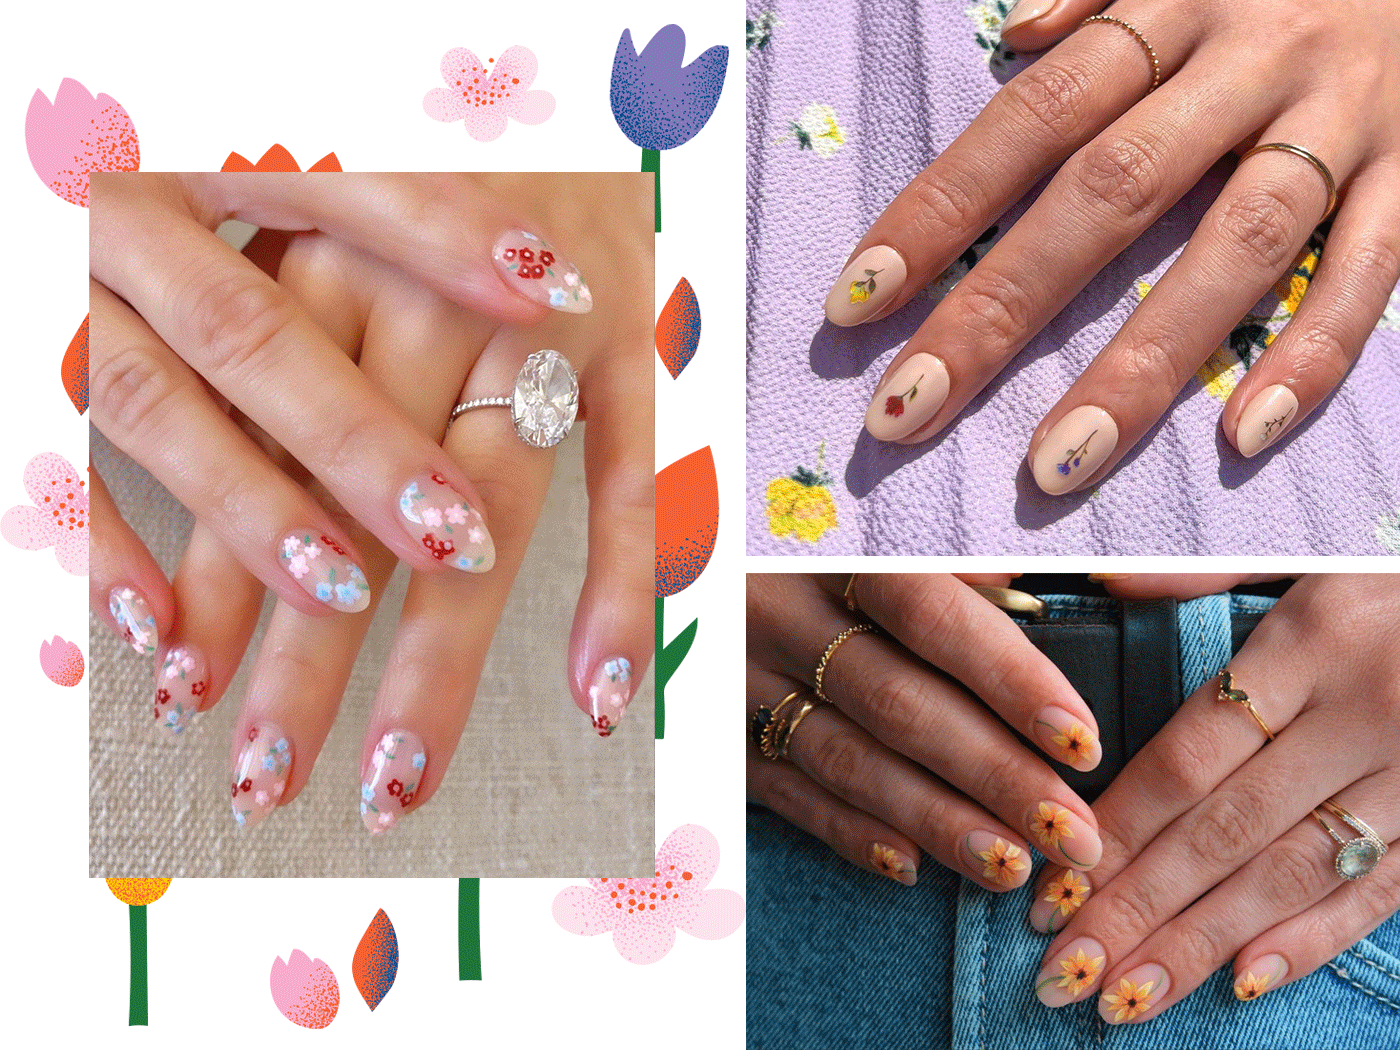 Floral manicure: Τα ωραιότερα looks για να γιορτάσεις τον Μάιο όπως του αρμόζει